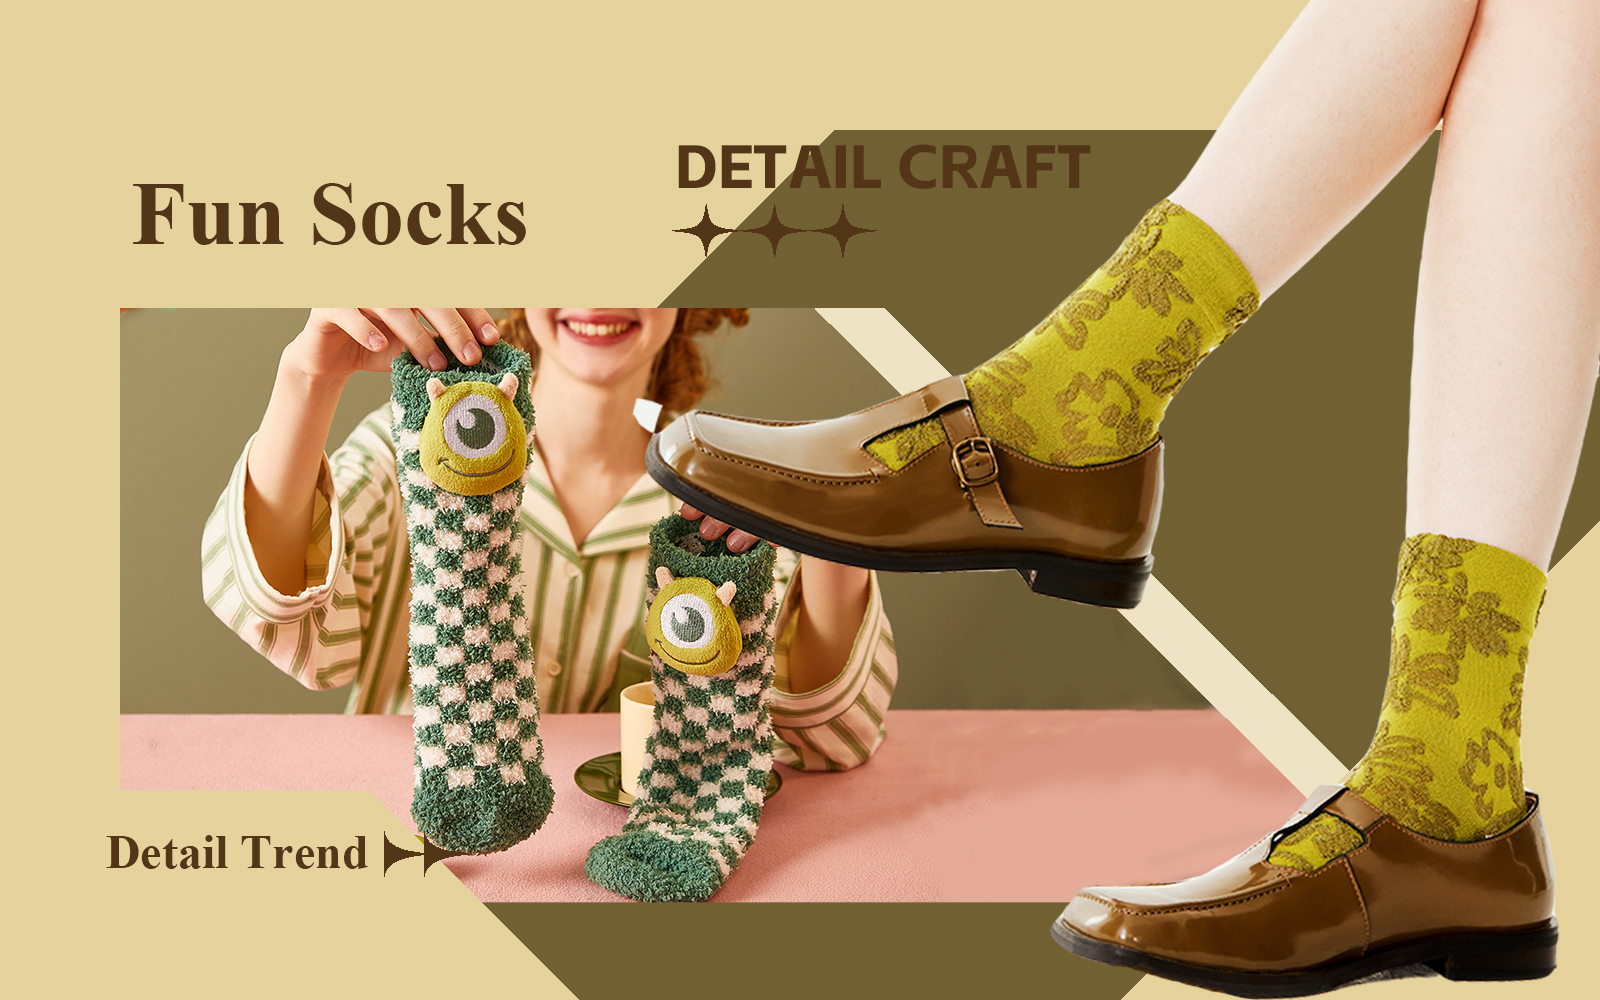 Fun Socks -- The Detail & Craft Trend for Socks